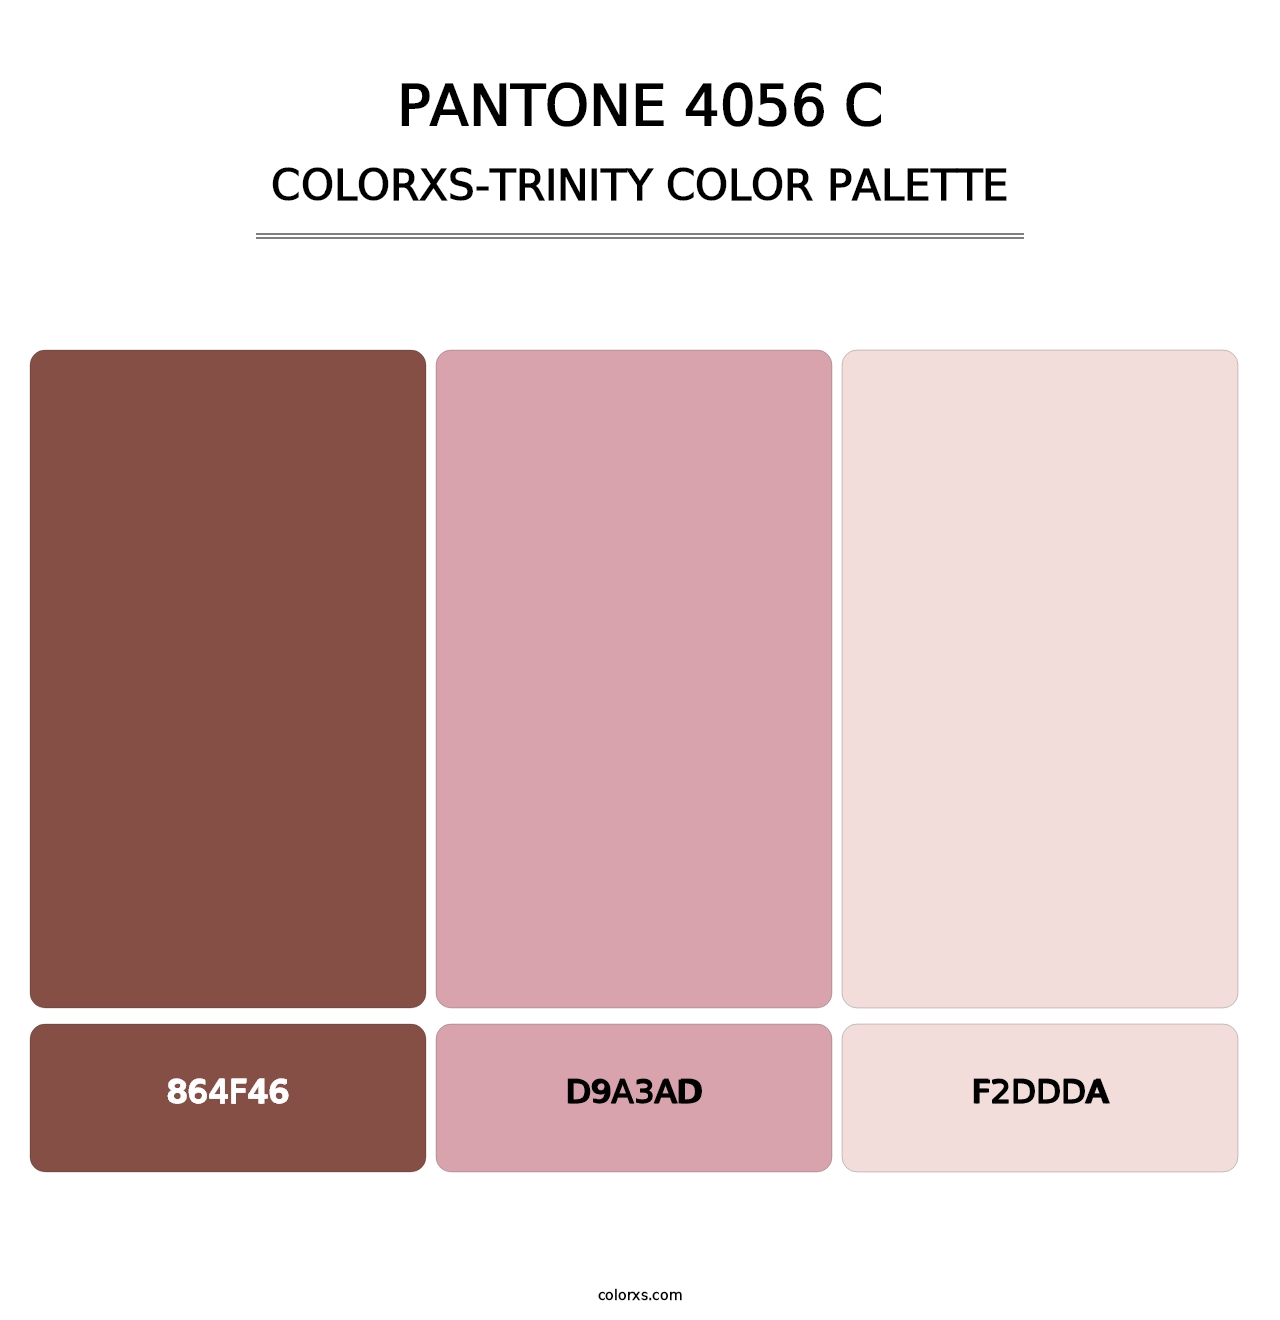 PANTONE 4056 C - Colorxs Trinity Palette